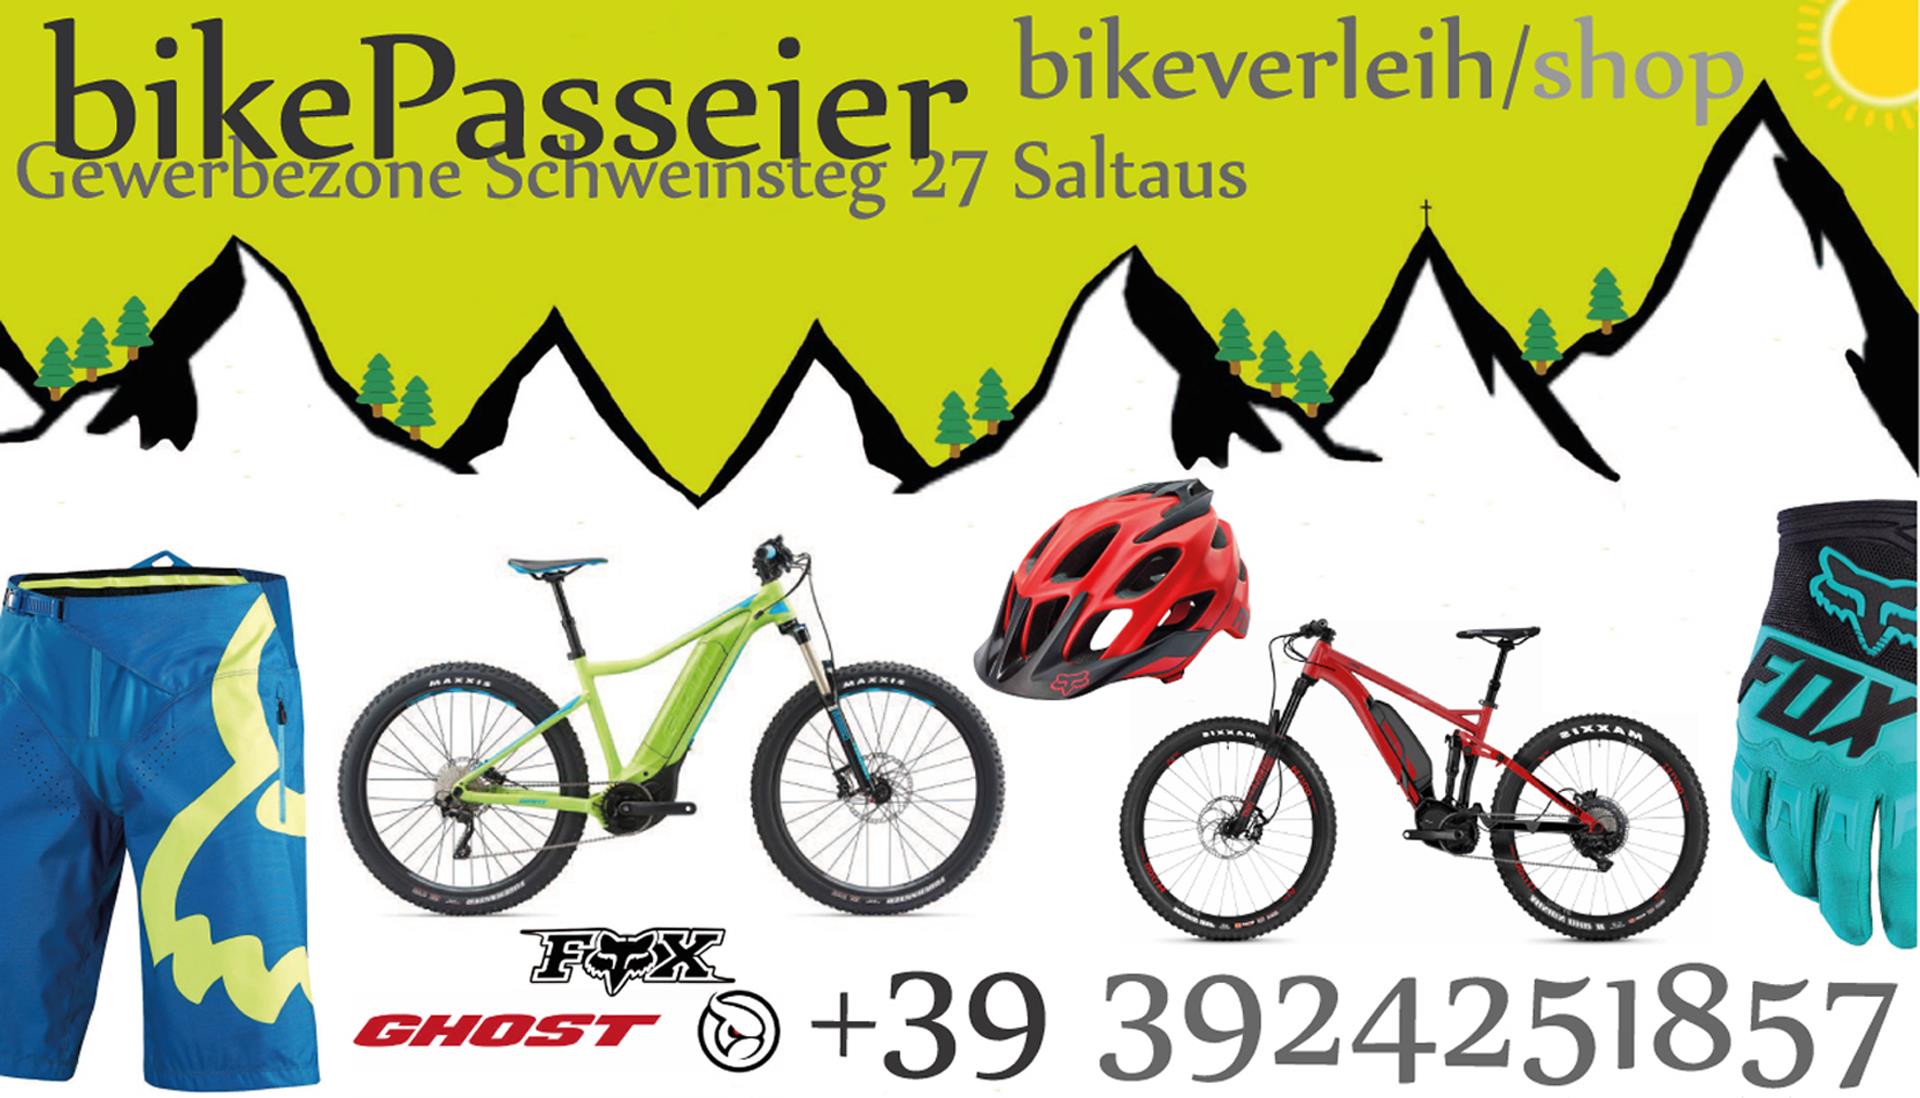 Bike Passeier Cycle Shop & Rentals